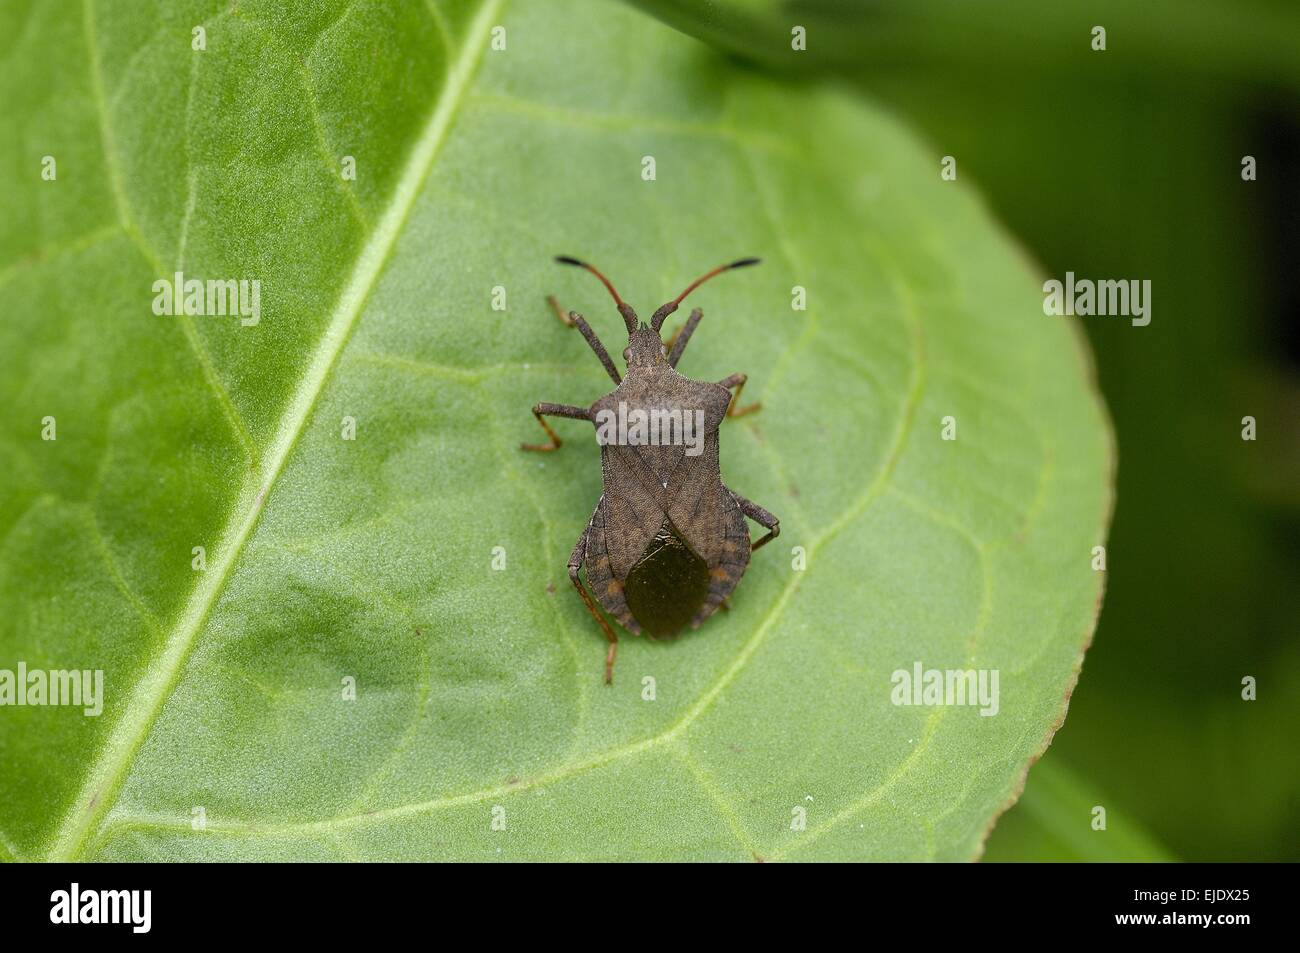 Brown Squash Bug - Dock Leaf Bug (Coreus marginatus - Cimex marginatus - Mesocerus marginatus) on leaf Stock Photo